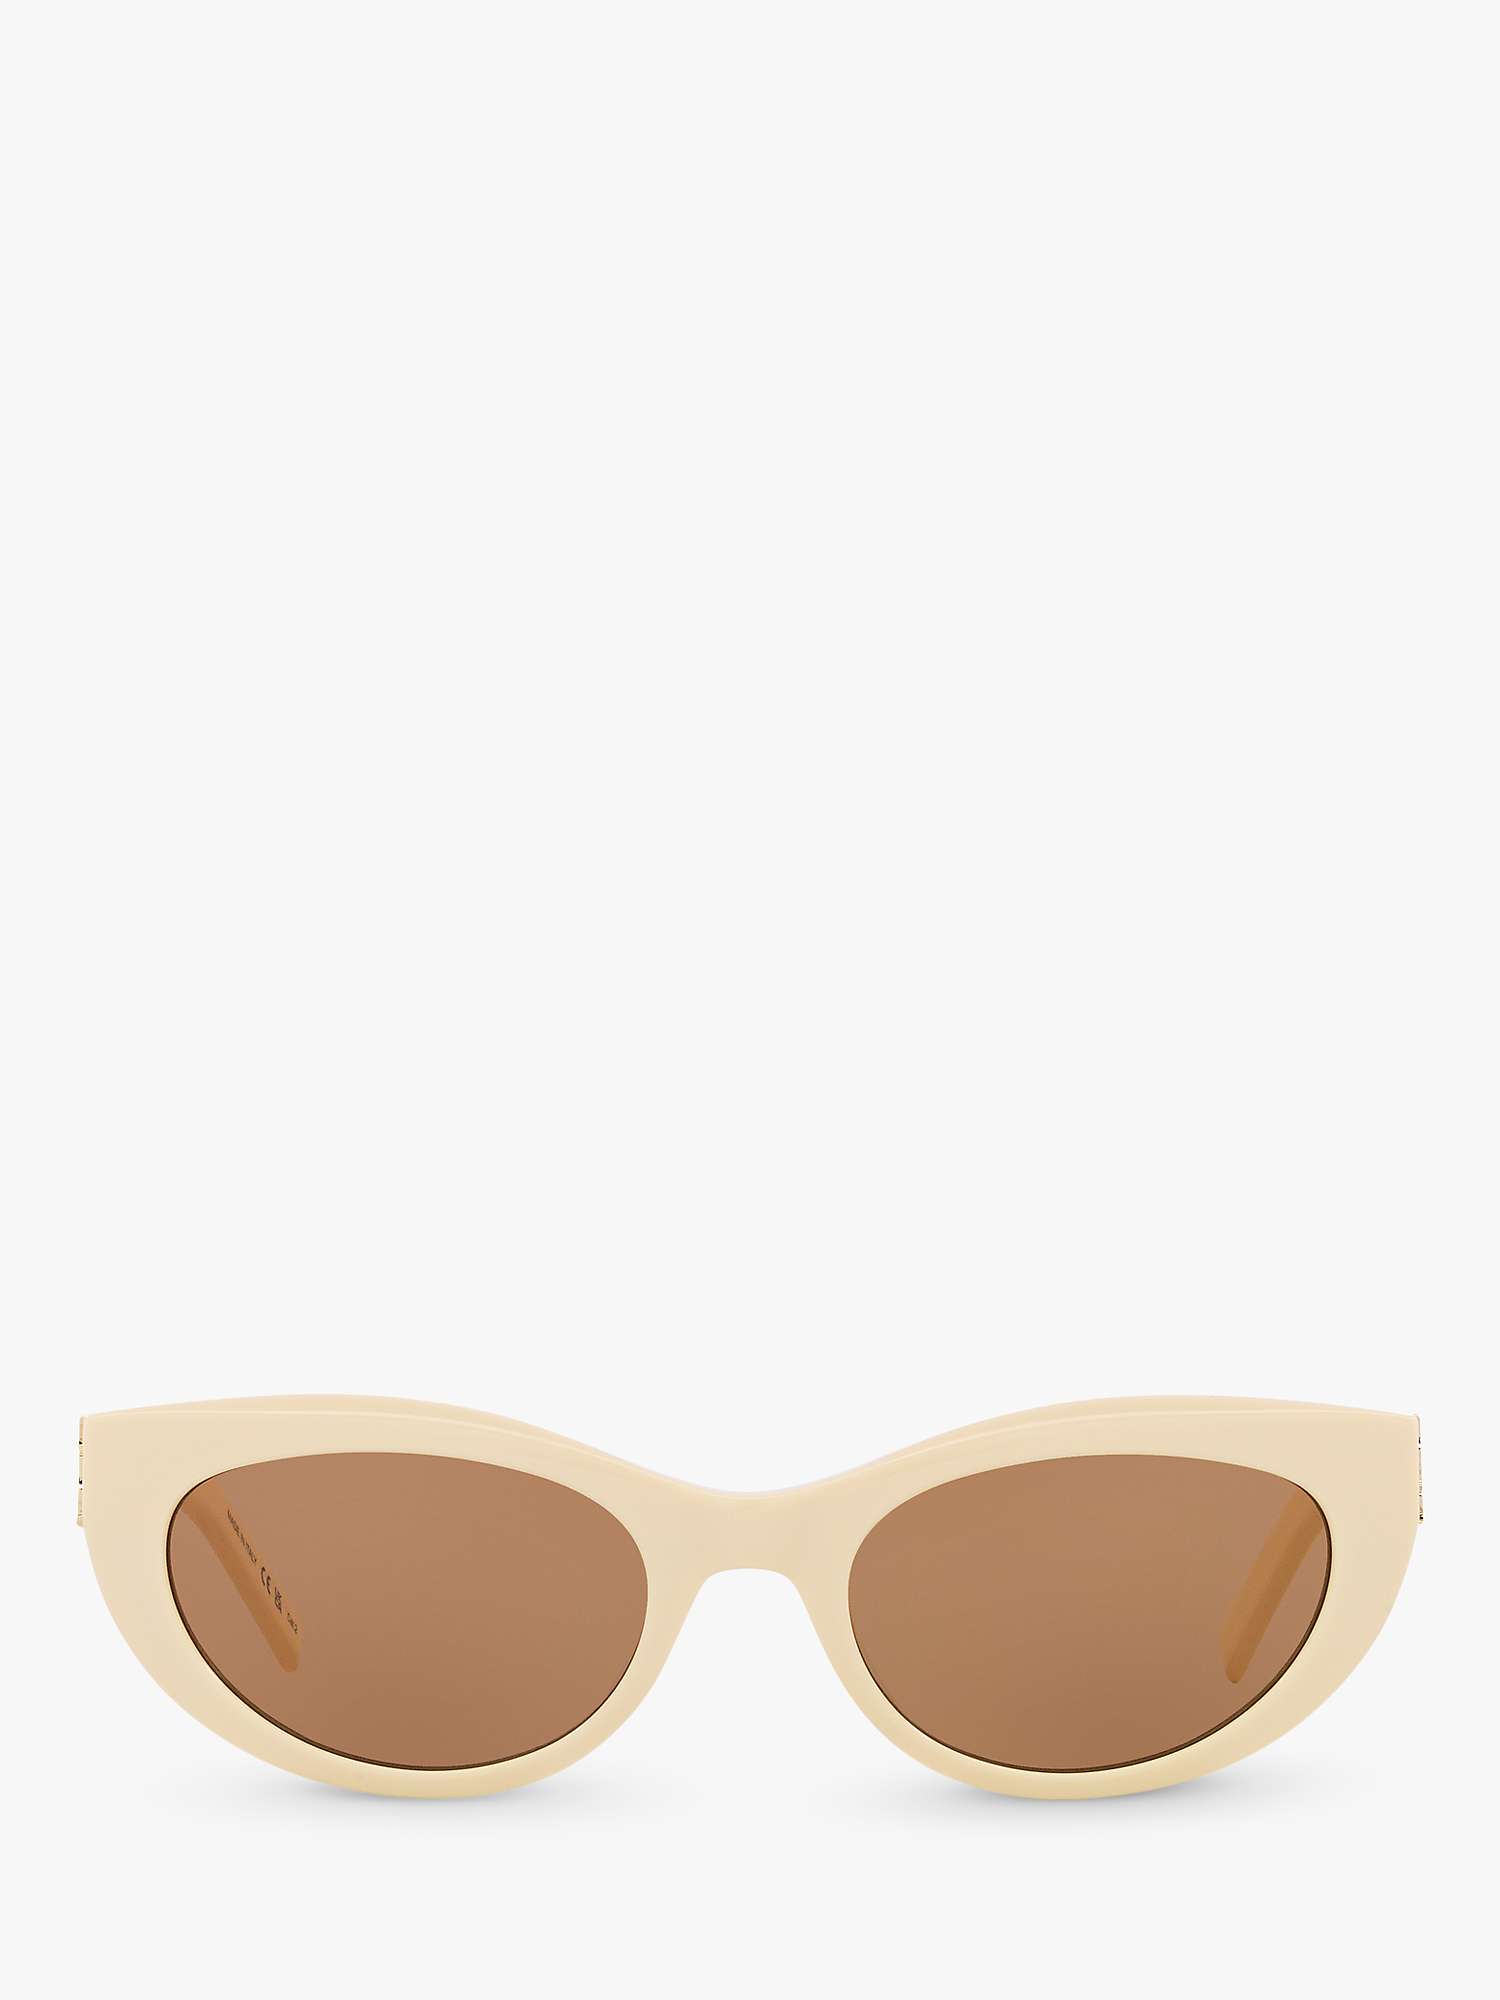 Buy Yves Saint Laurent YS000478 Women's Oval Sunglasses, Ivory/Brown Online at johnlewis.com